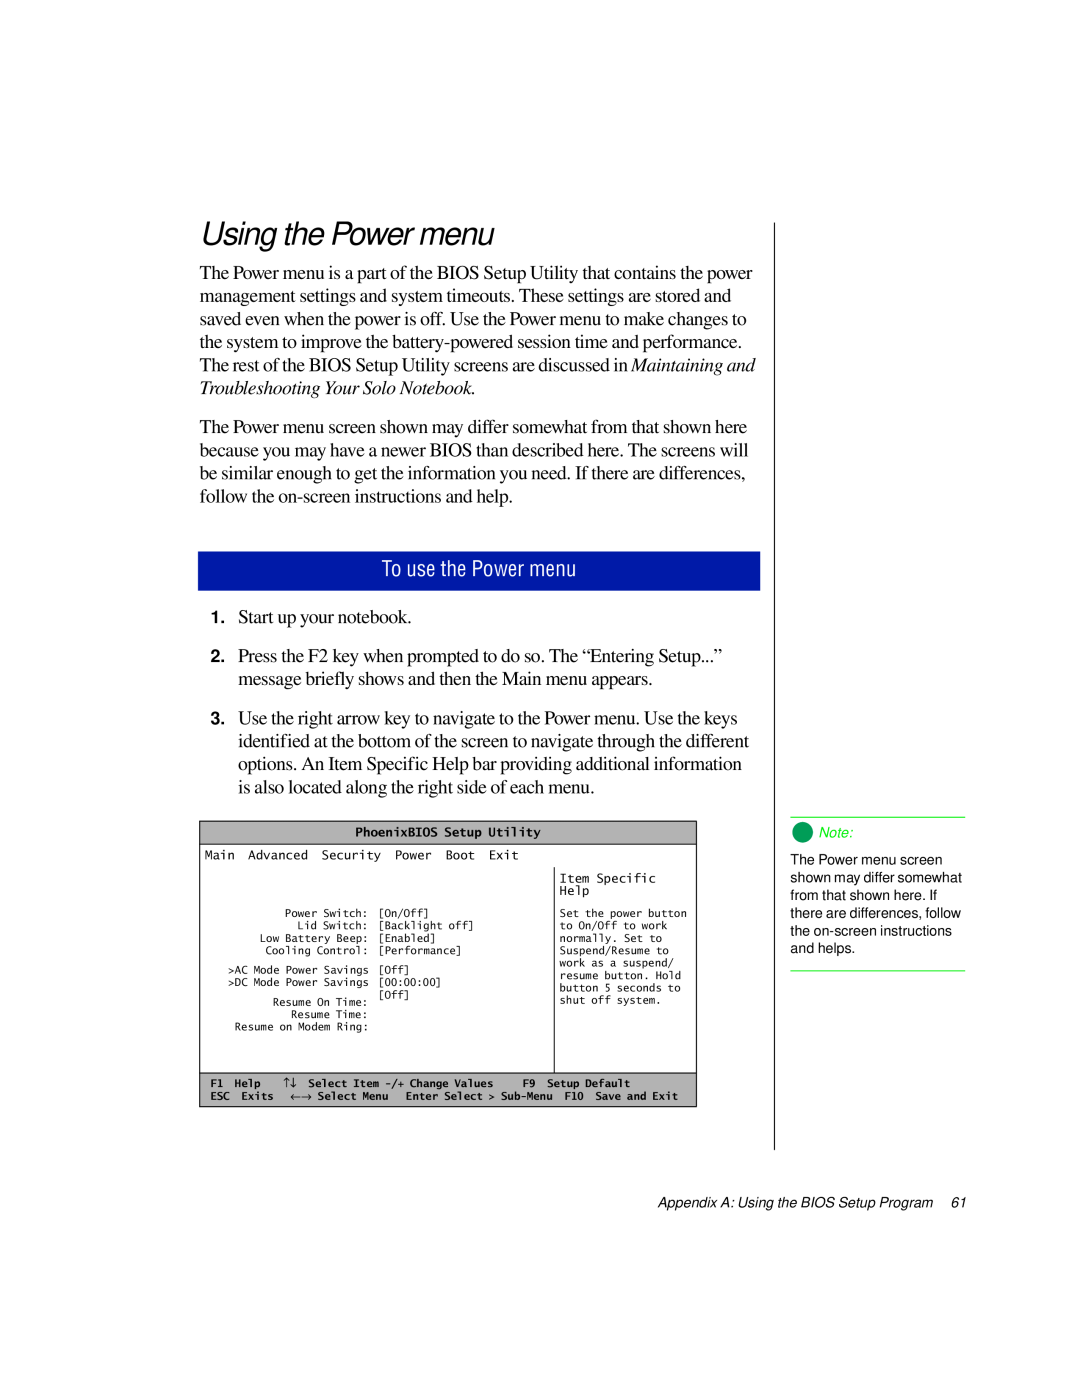 Gateway TM 5150 manual Using the Power menu, To use the Power menu 